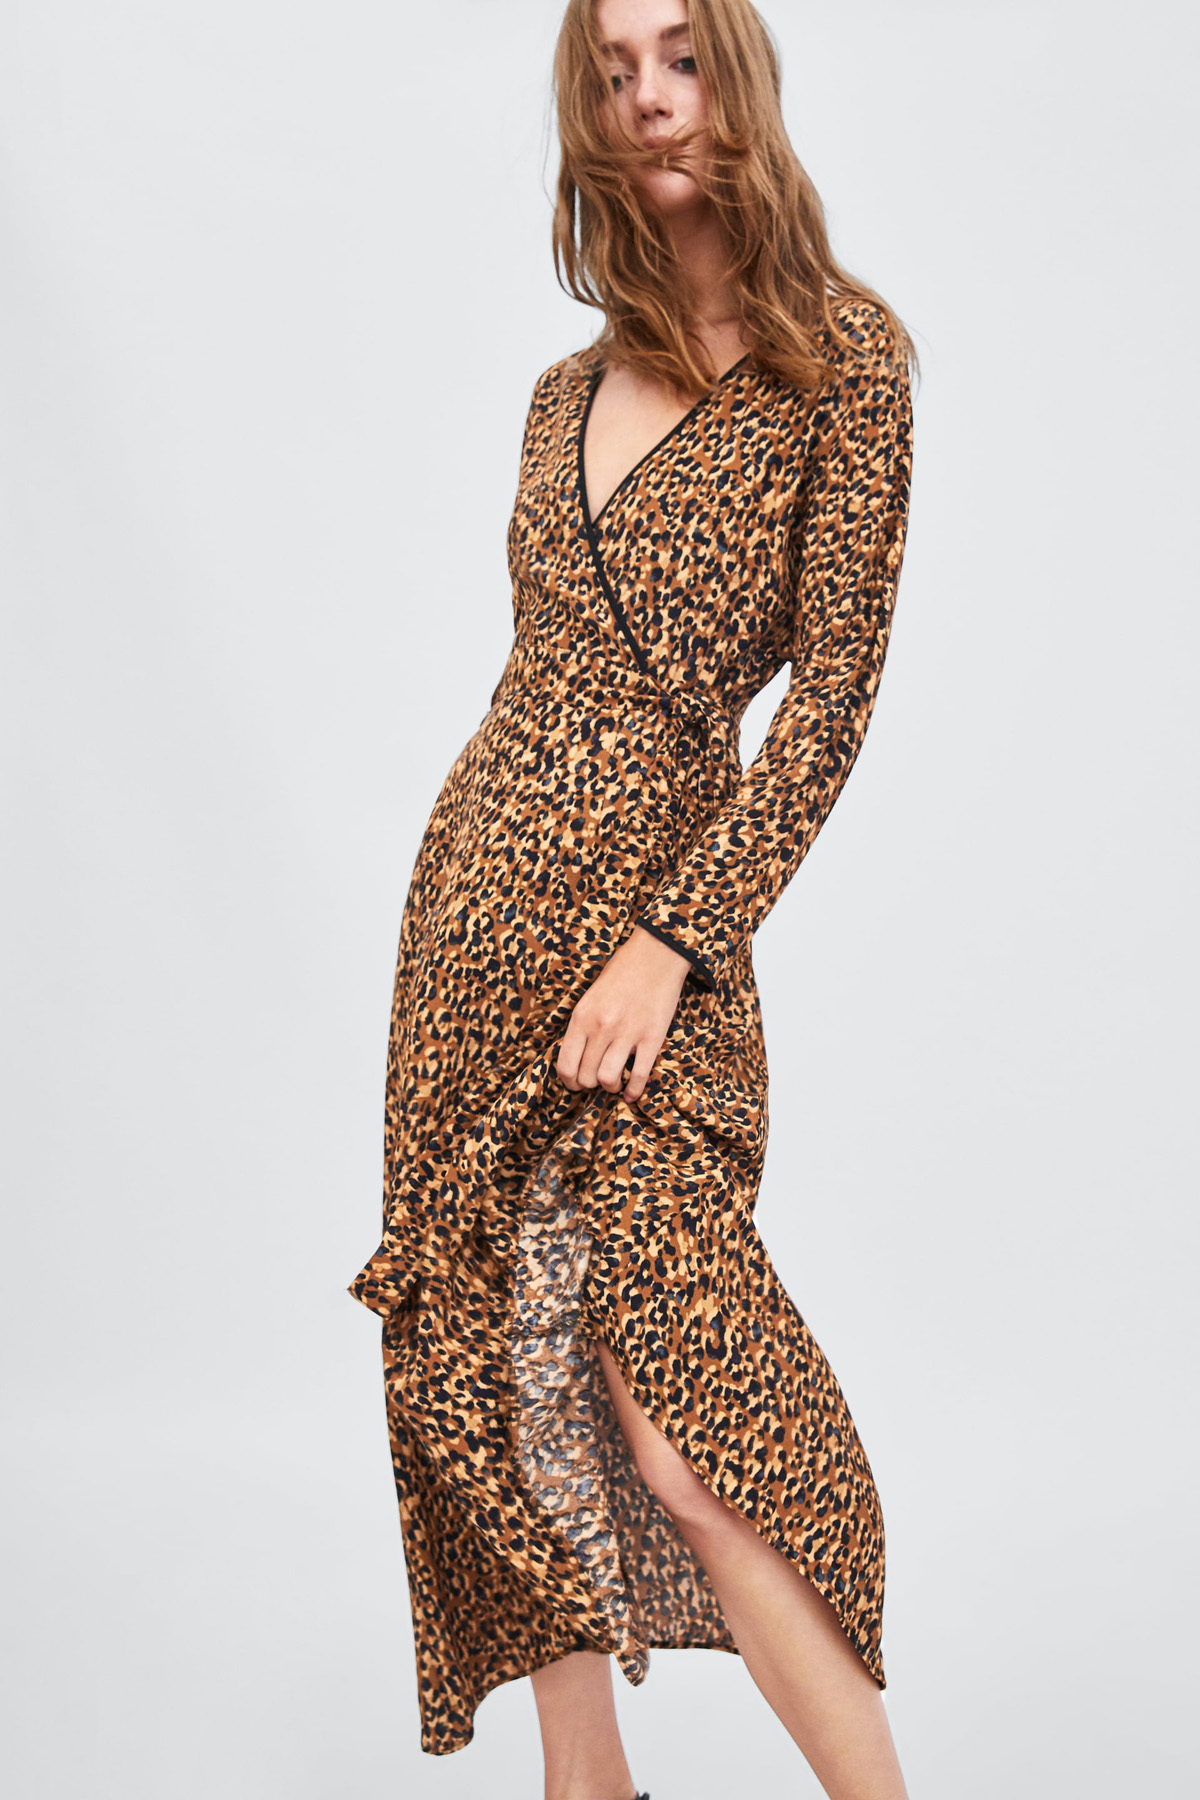 zara leopard skin dress